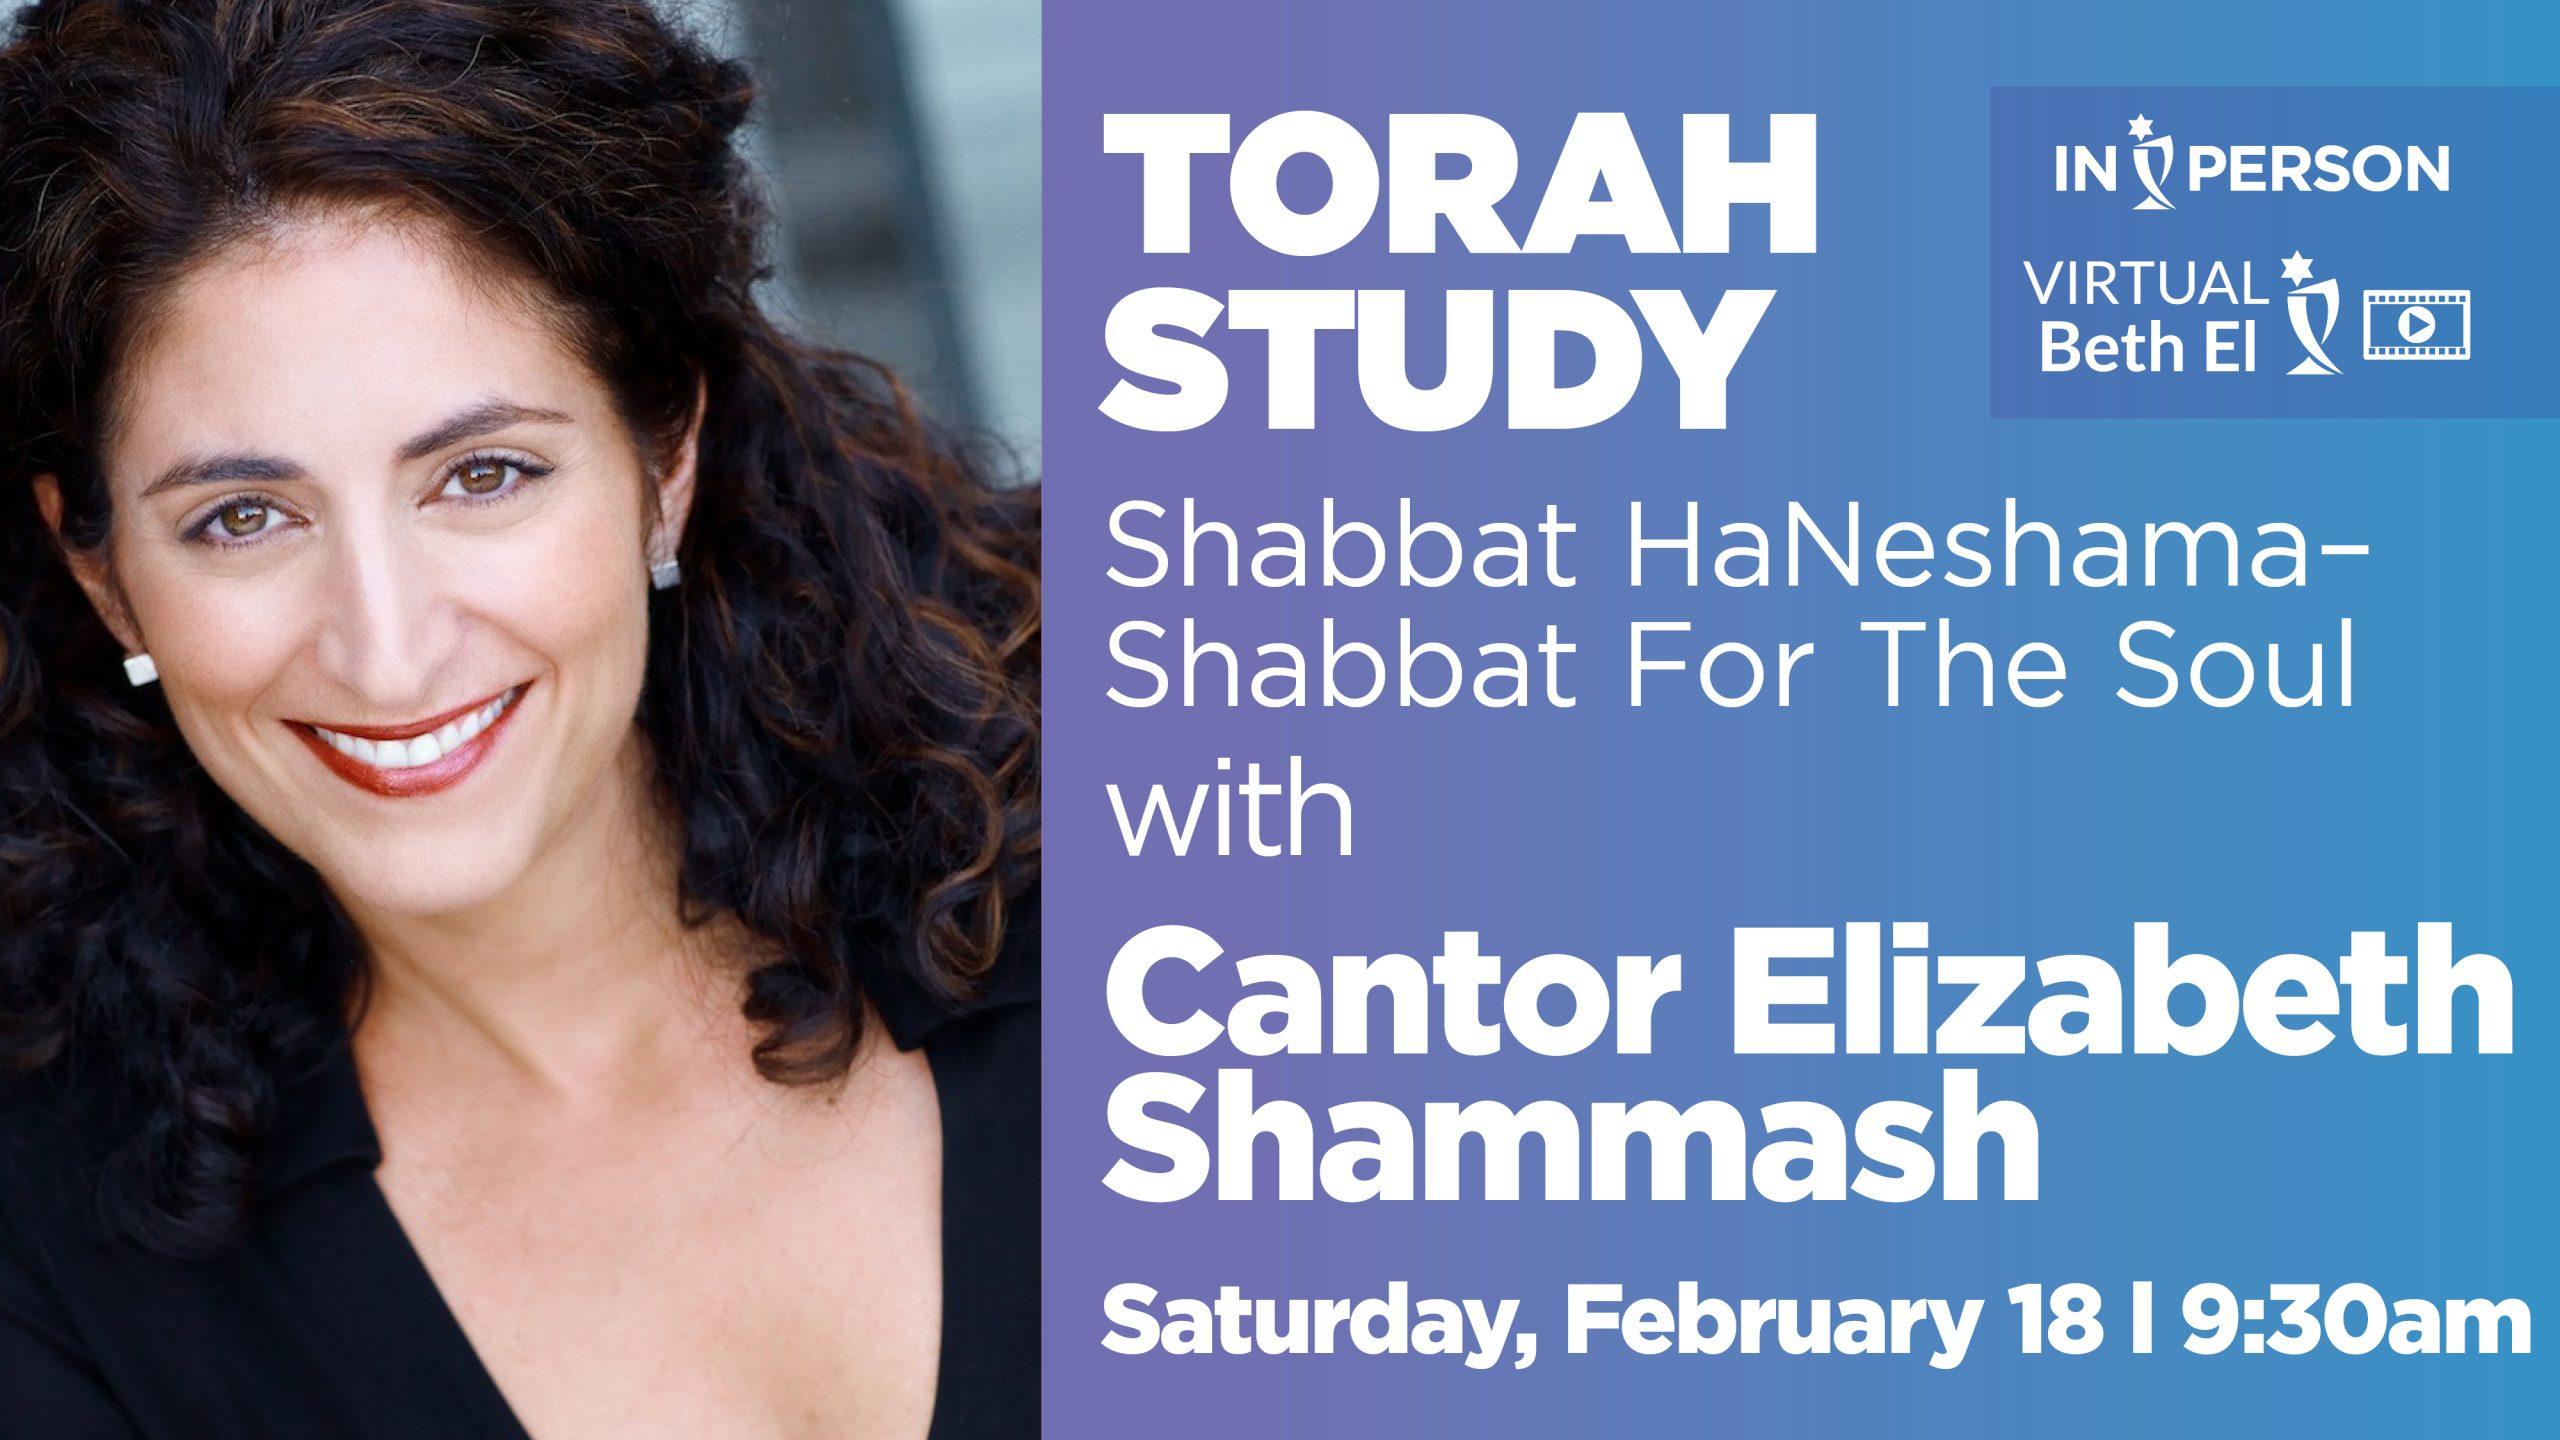 Shabbat Morning Service & Torah Study with Cantor Elizabeth Shammash, event graphic for Temple Beth El of Boca Raton